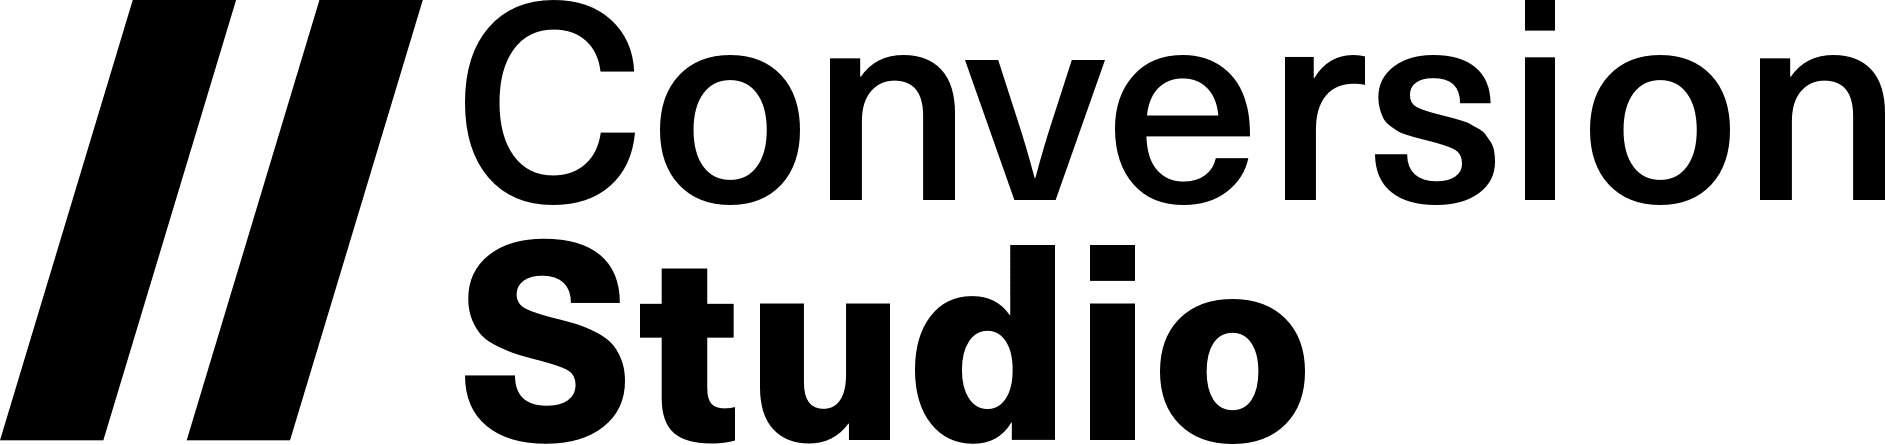 Conversion Studio GmbH logo